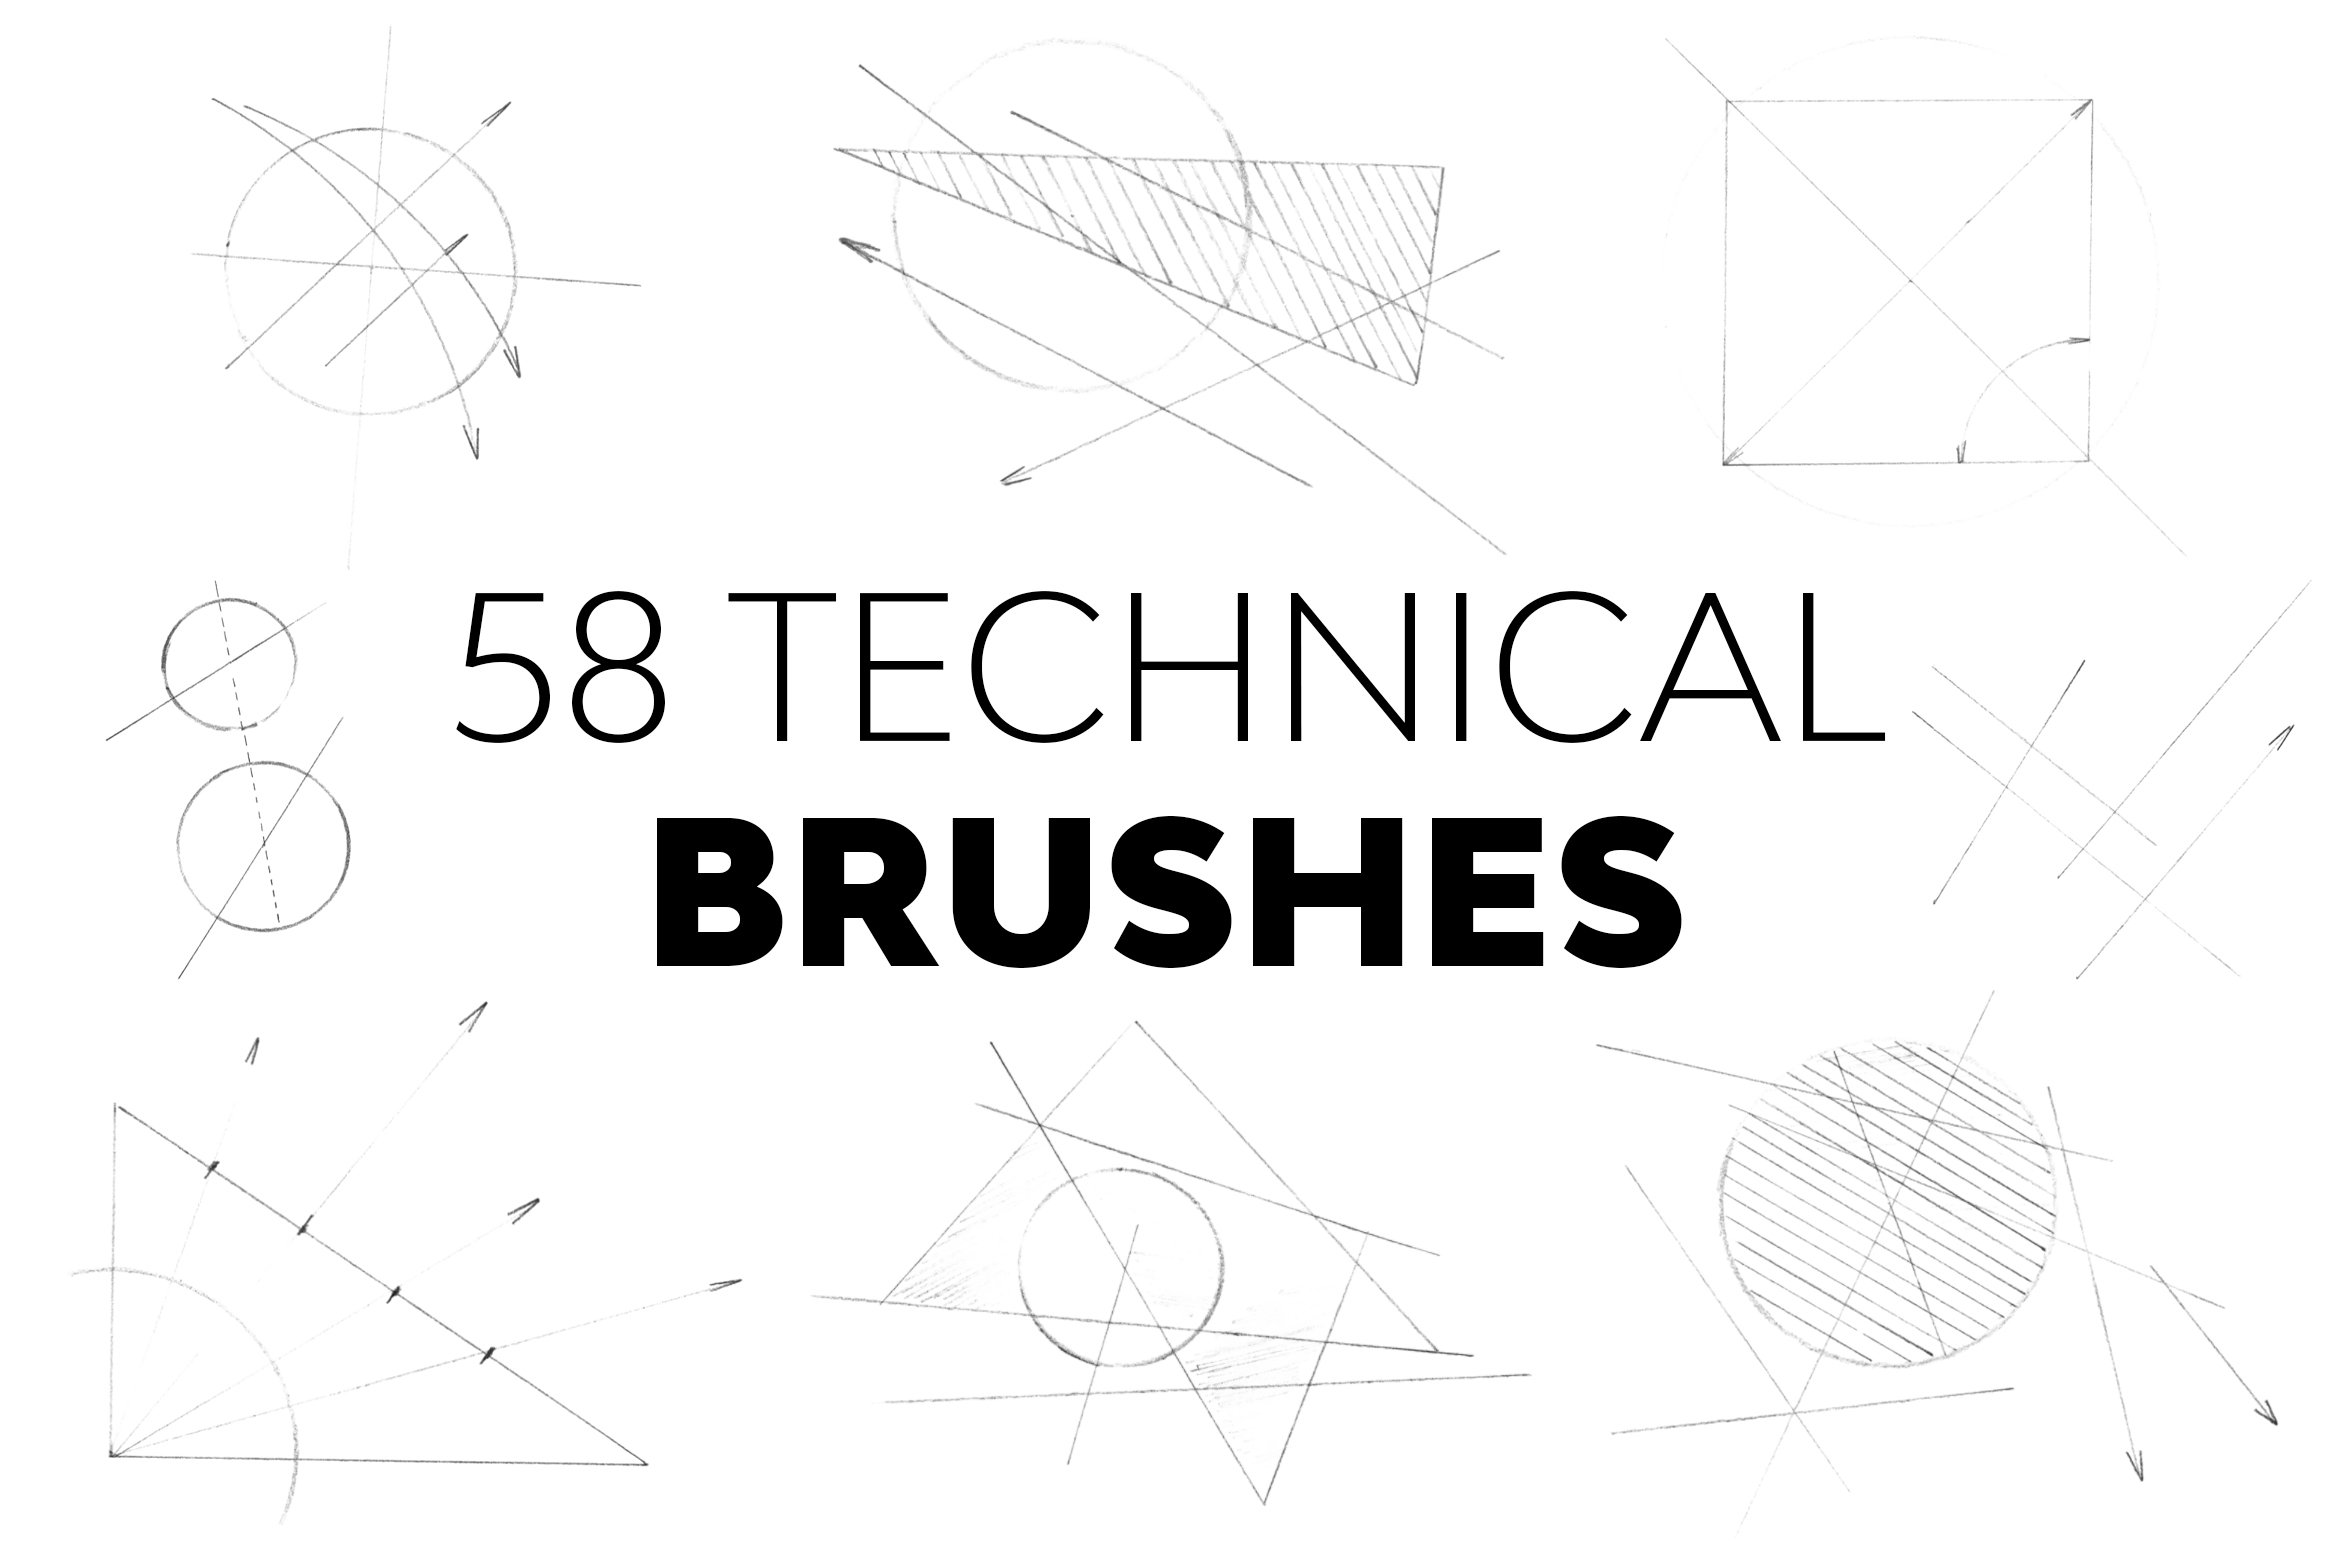 Technical Brushescover image.